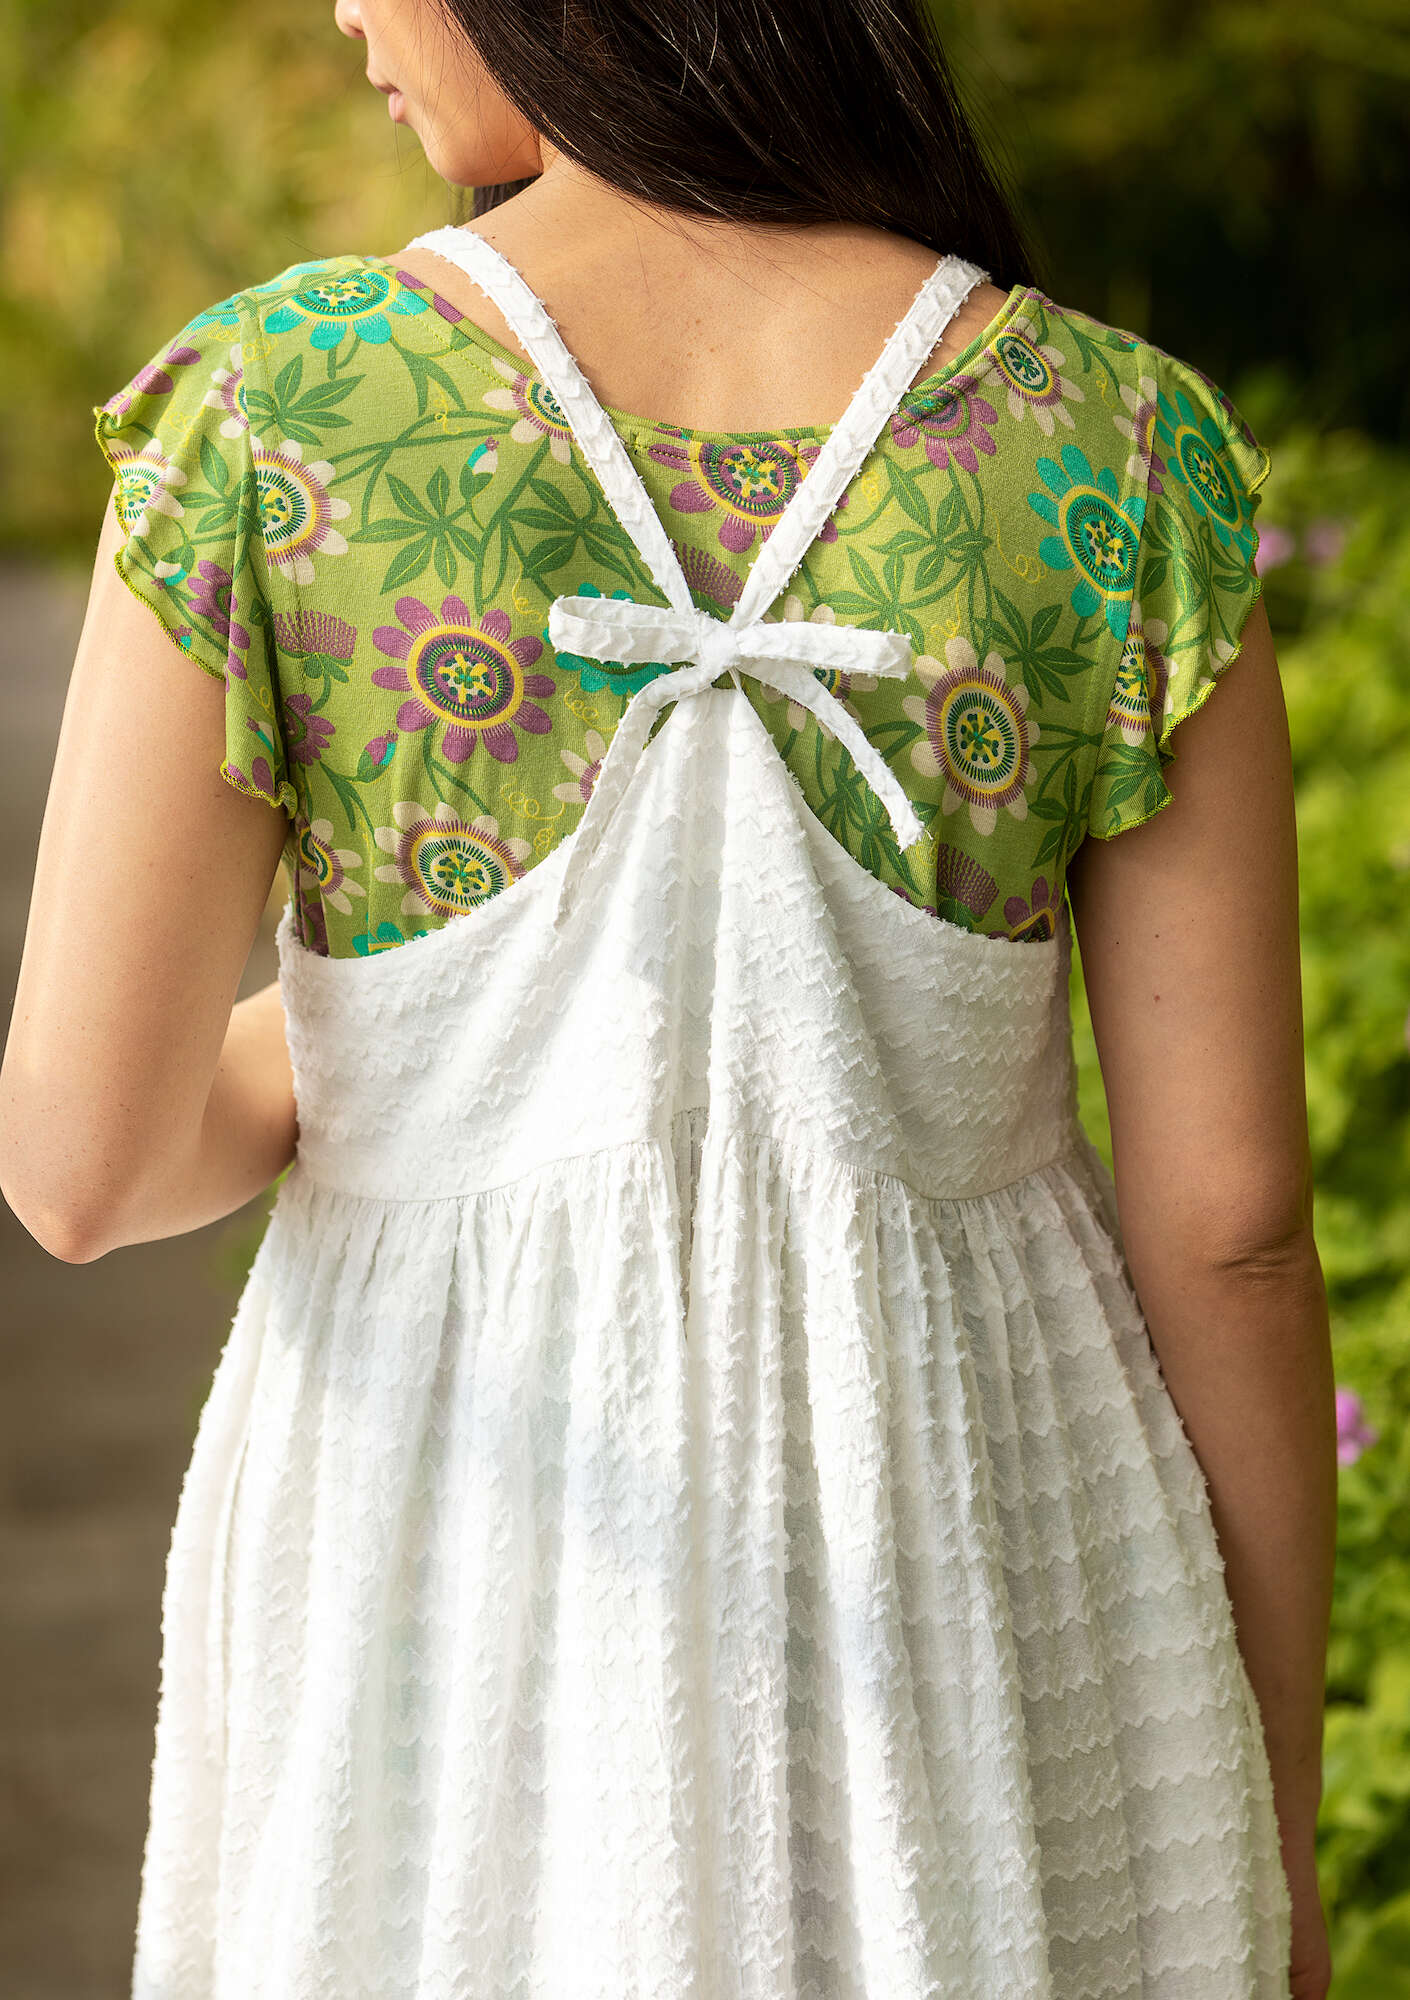 Woven dress in organic cotton light ecru